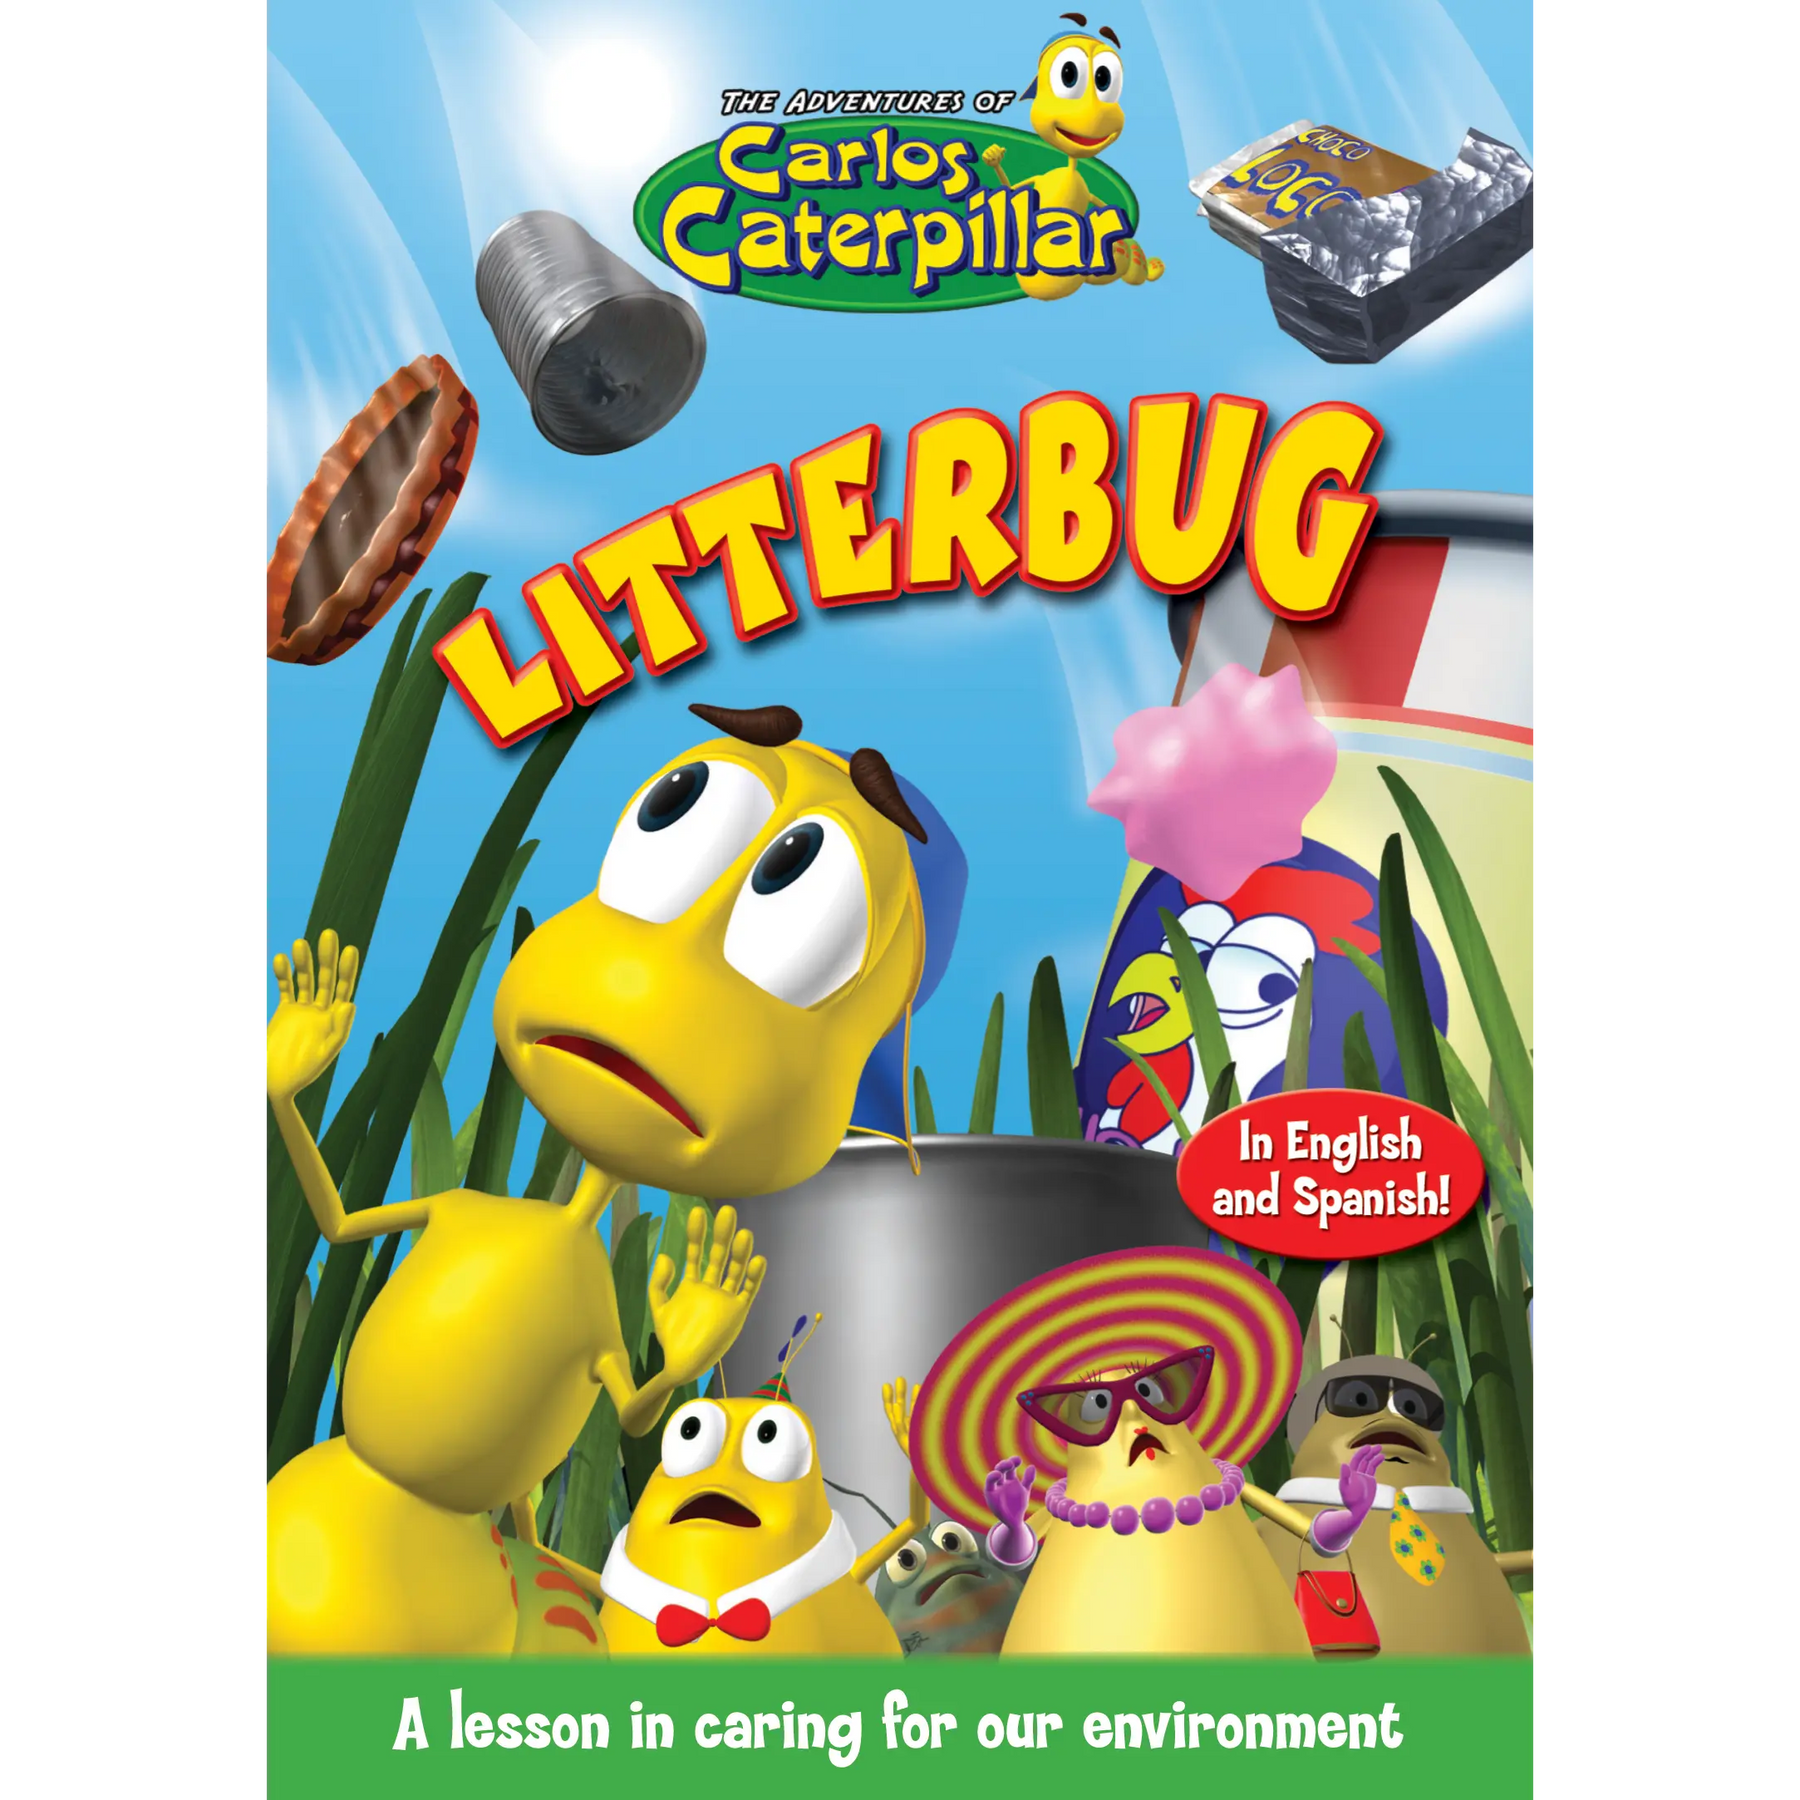 Carlos Caterpillar Episode 04: Litterbug - Video Download